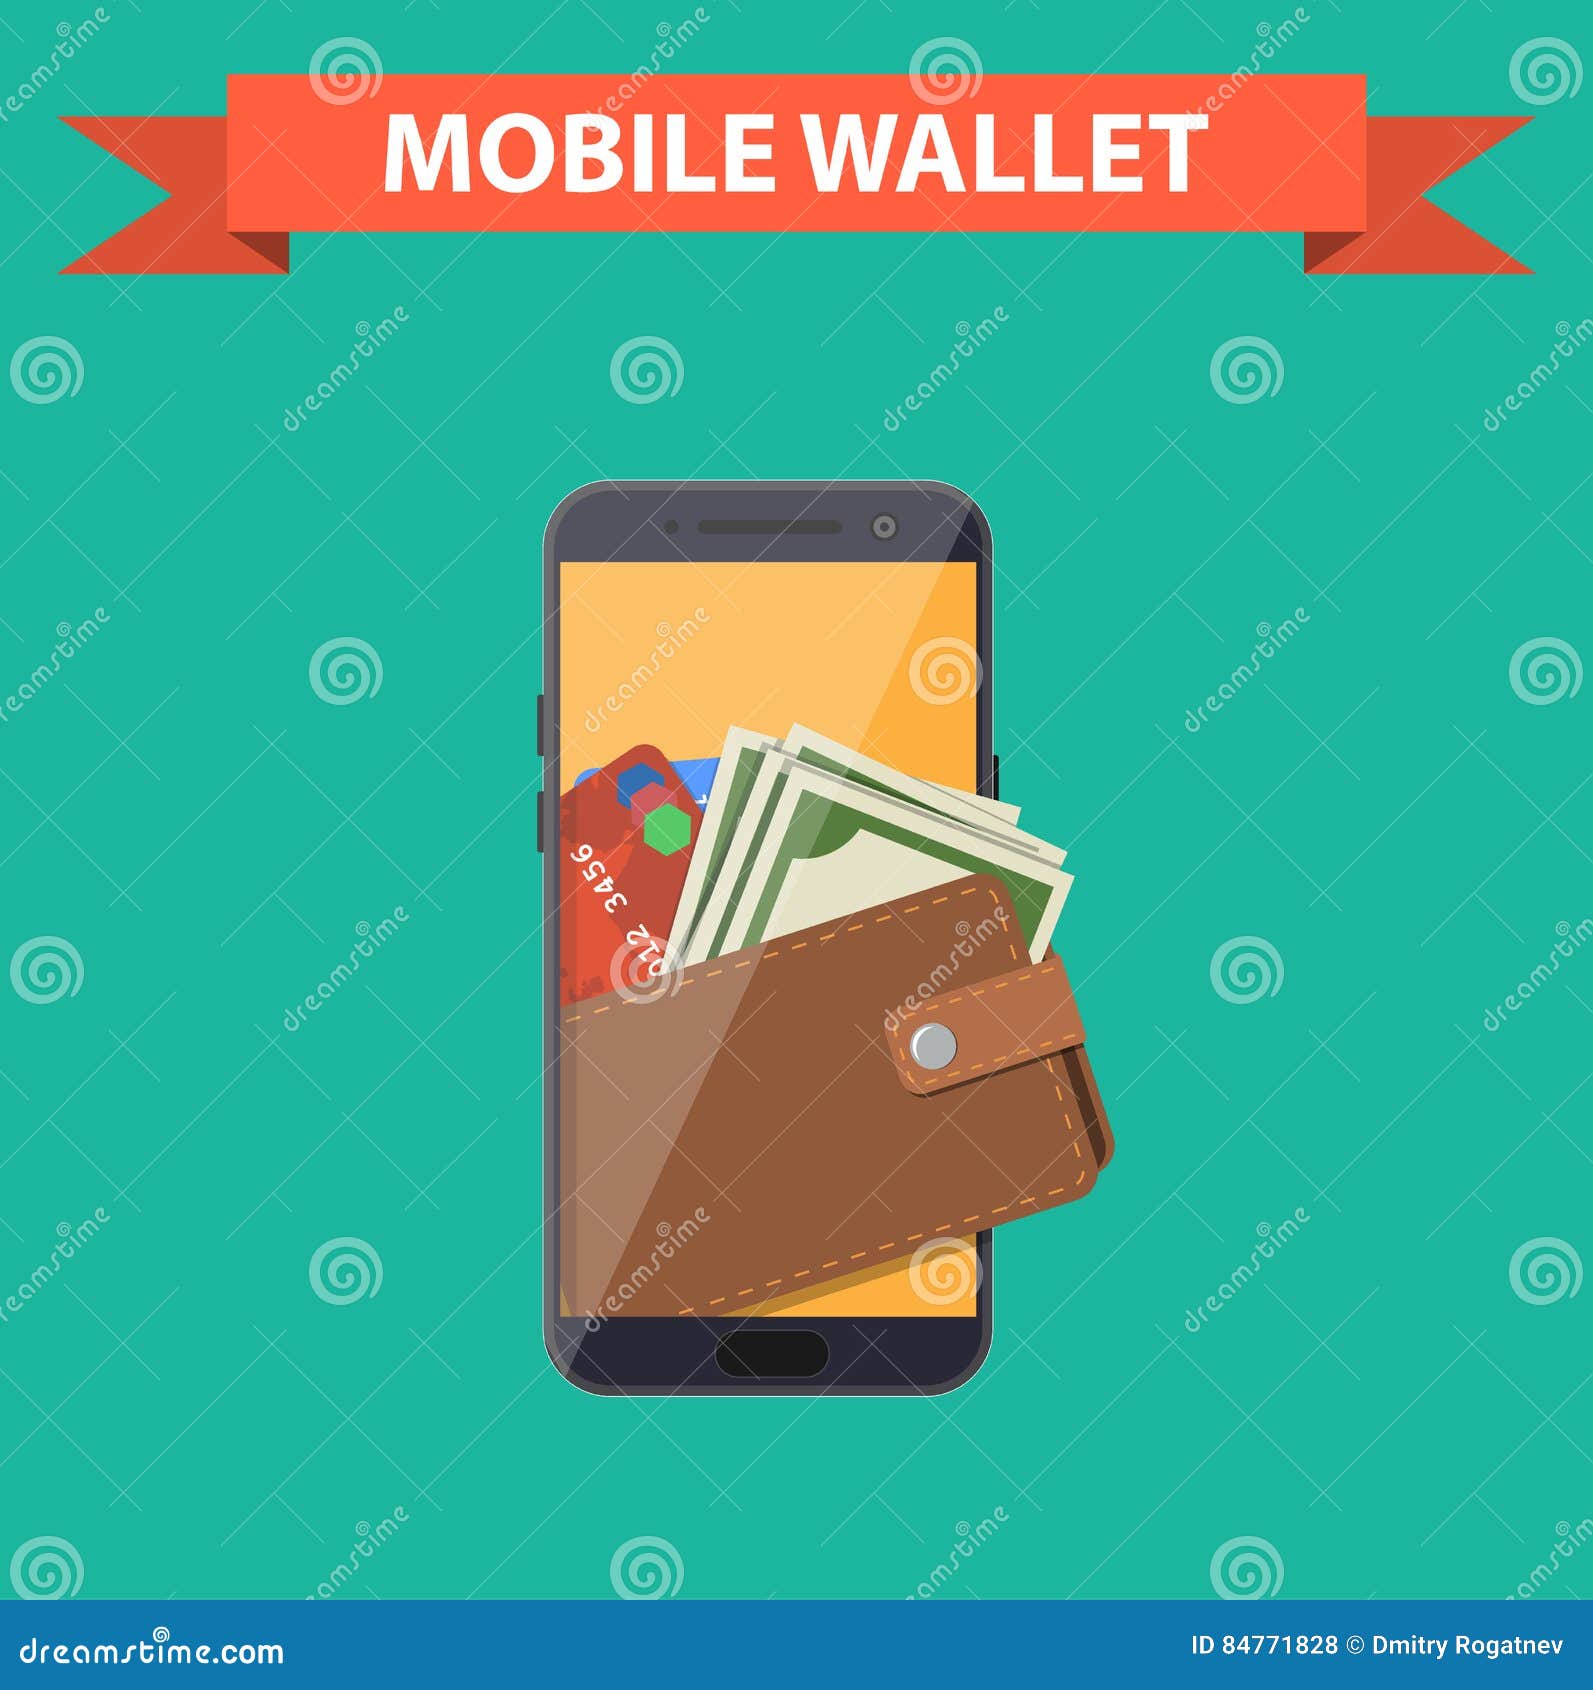 Digital mobile wallet stock vector. Illustration of gain - 84771828